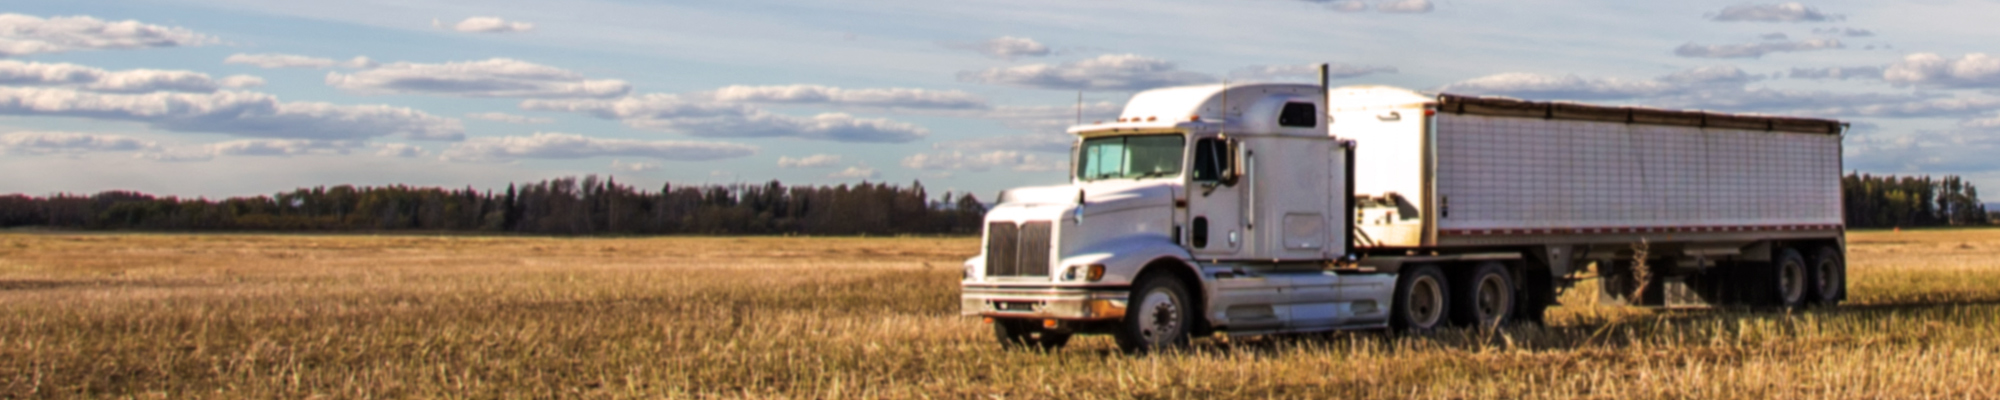 Semi-truck hauler driving through farm field